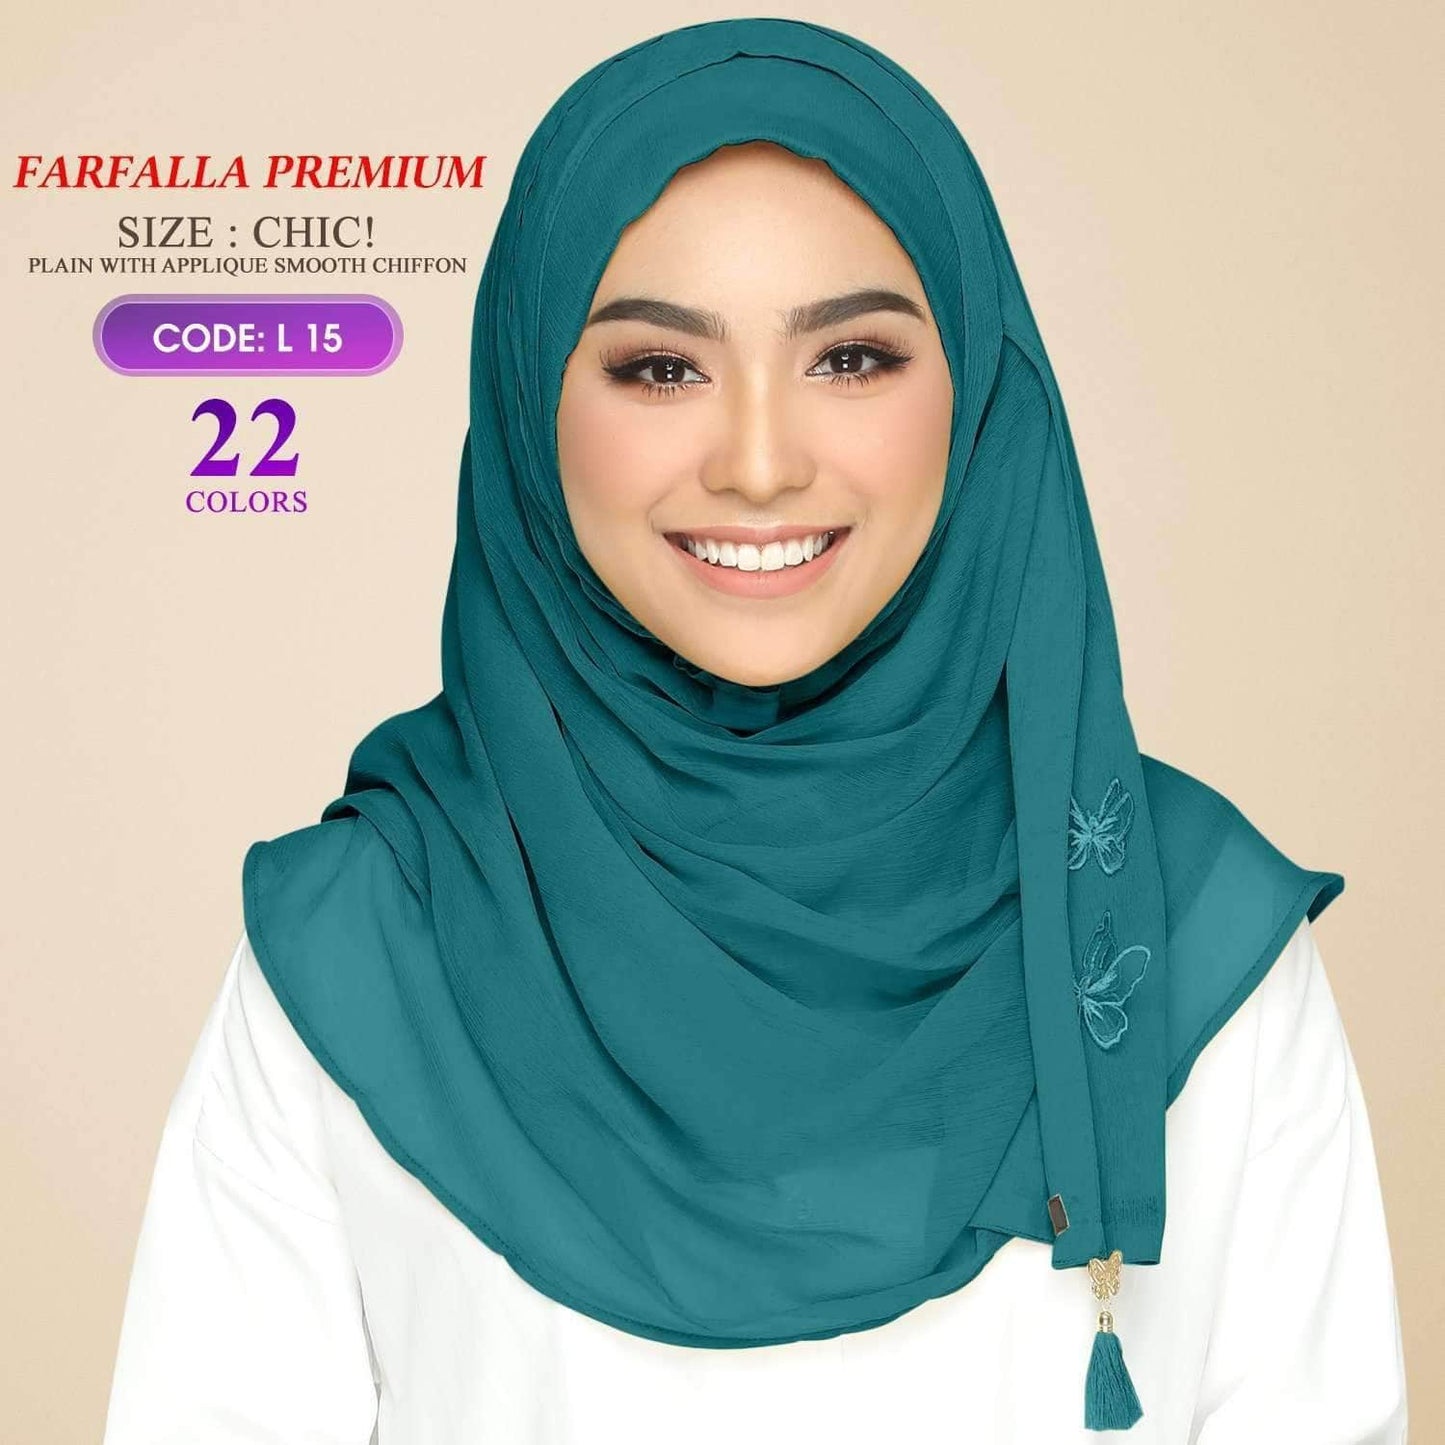 Bokitta Farfalla Premium Chic! Plain Collection RM19